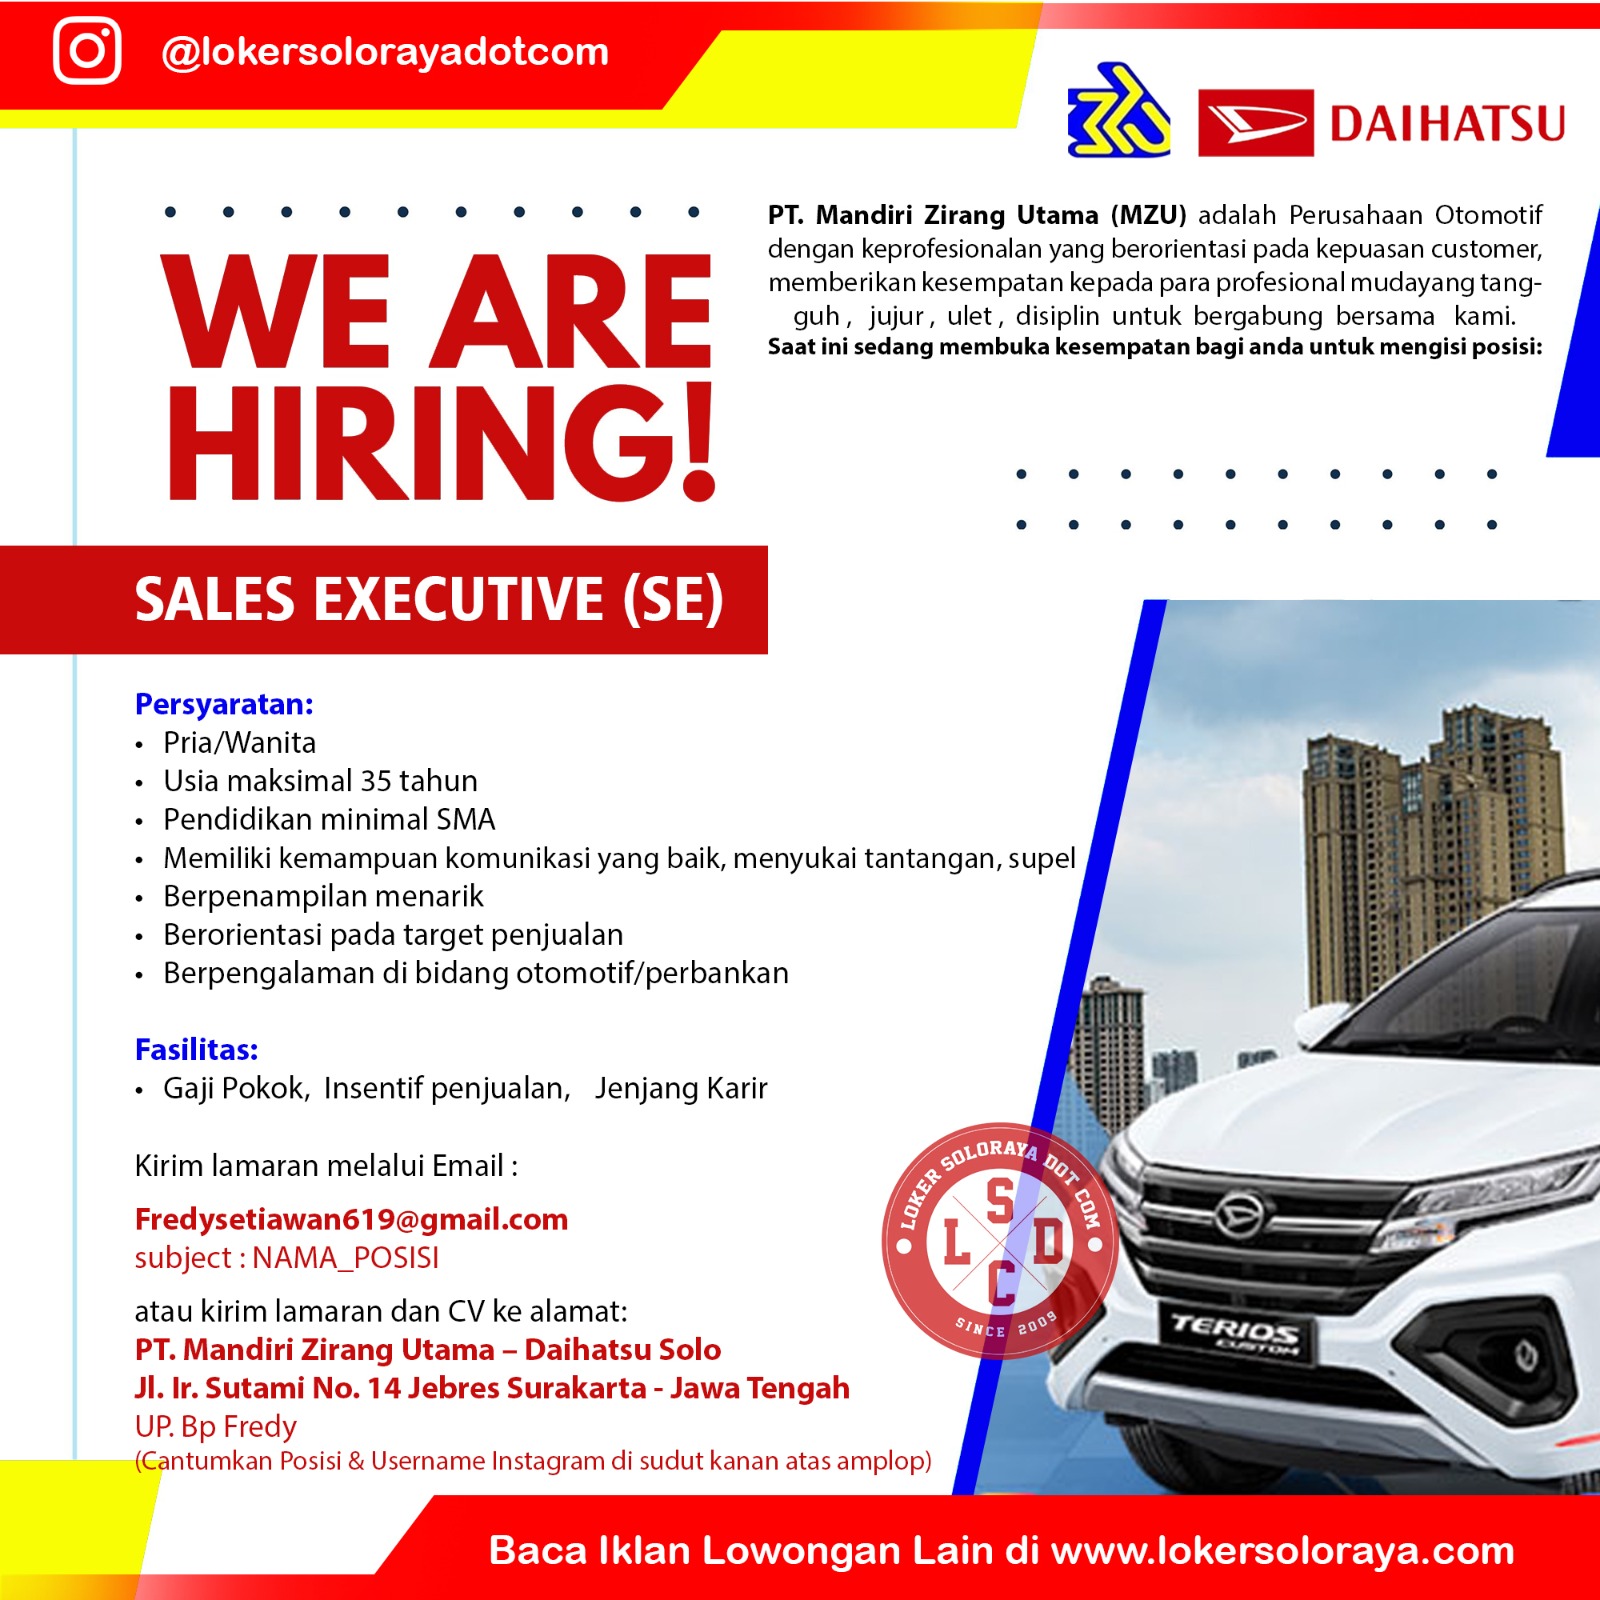 Loker Sales Executive Daihatsu di PT Mandiri Zirang Utama Solo